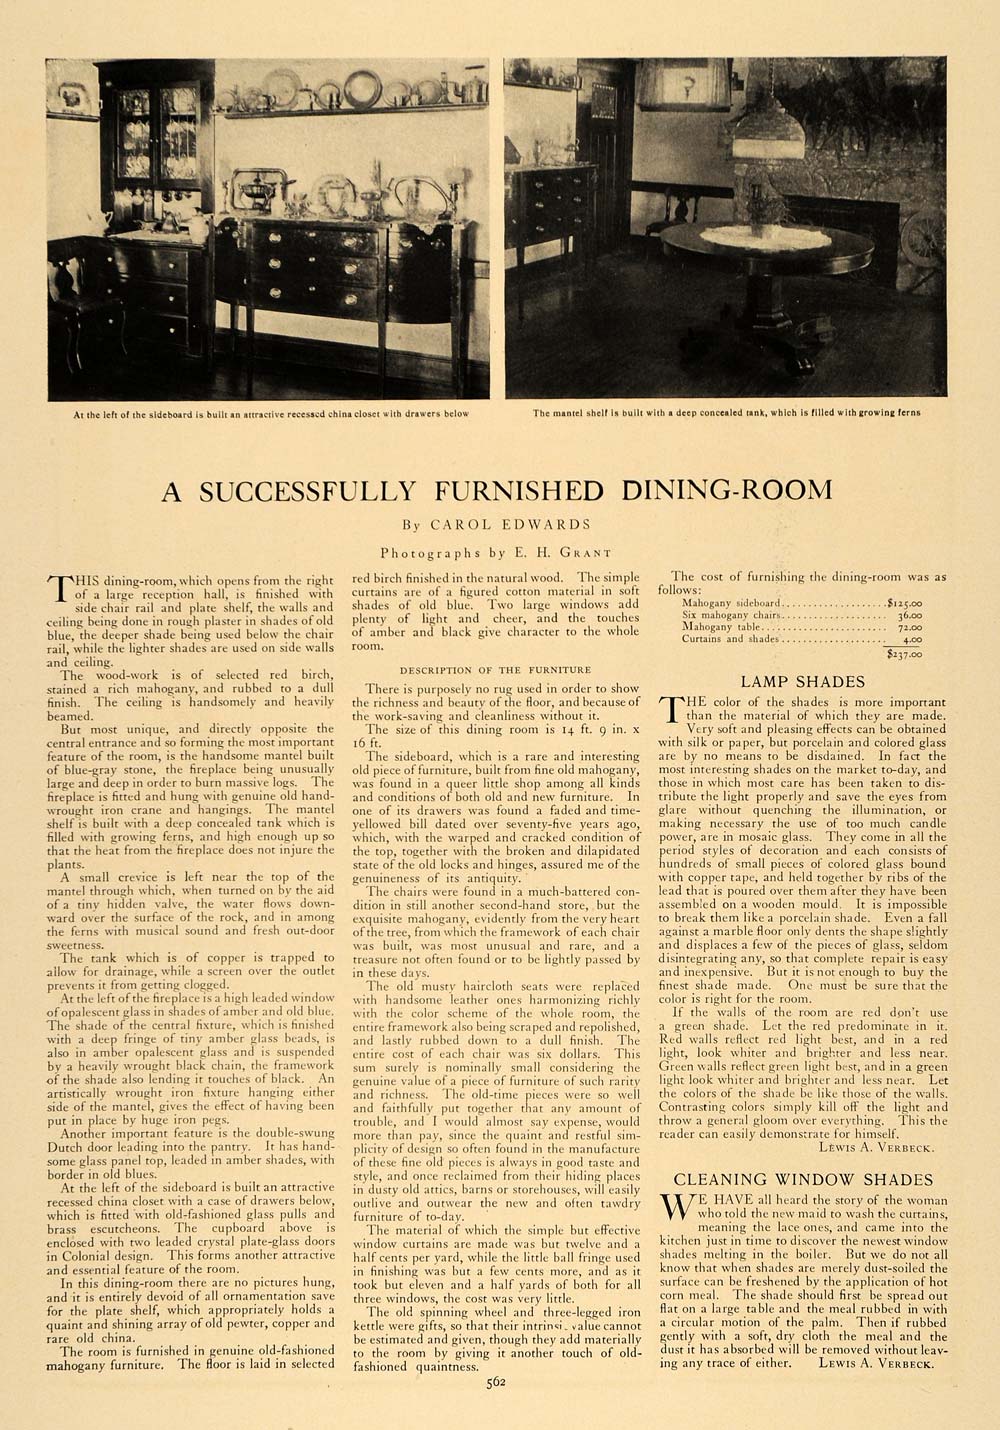 1907 Article Furnished Dining Room Success C. Edwards - ORIGINAL CL9